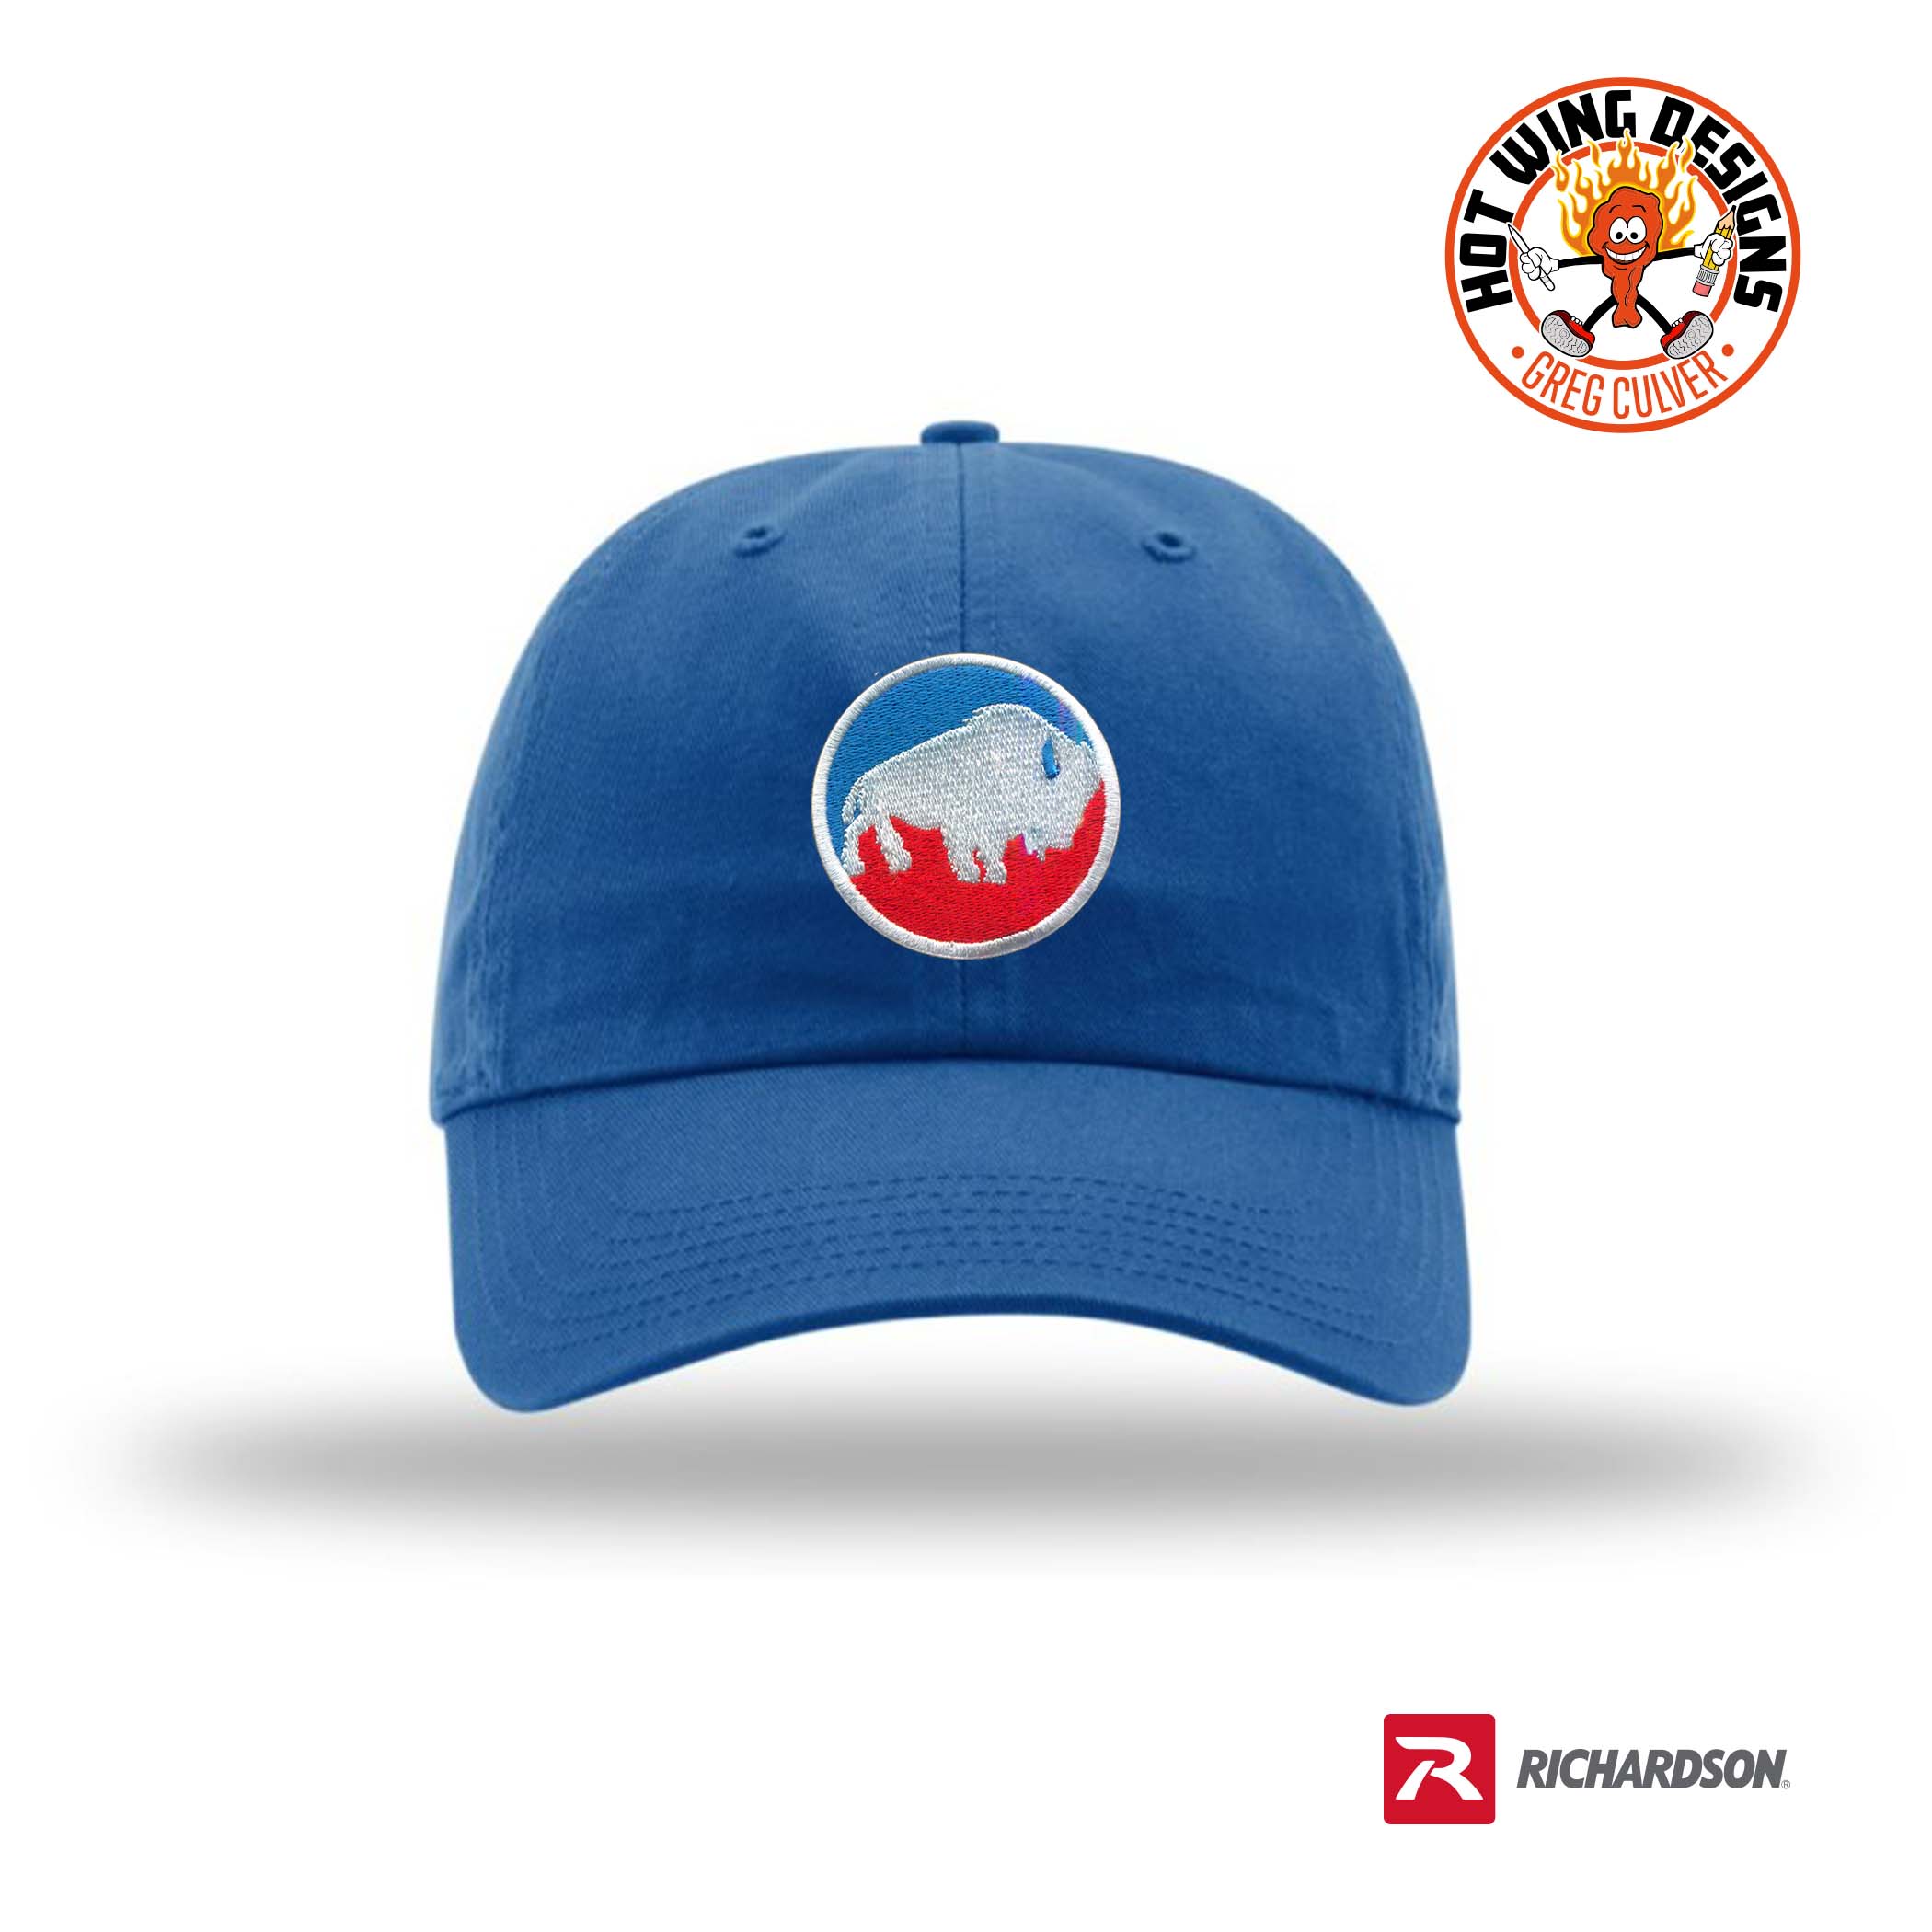 The Buffalo League 320 Royal OG hat.